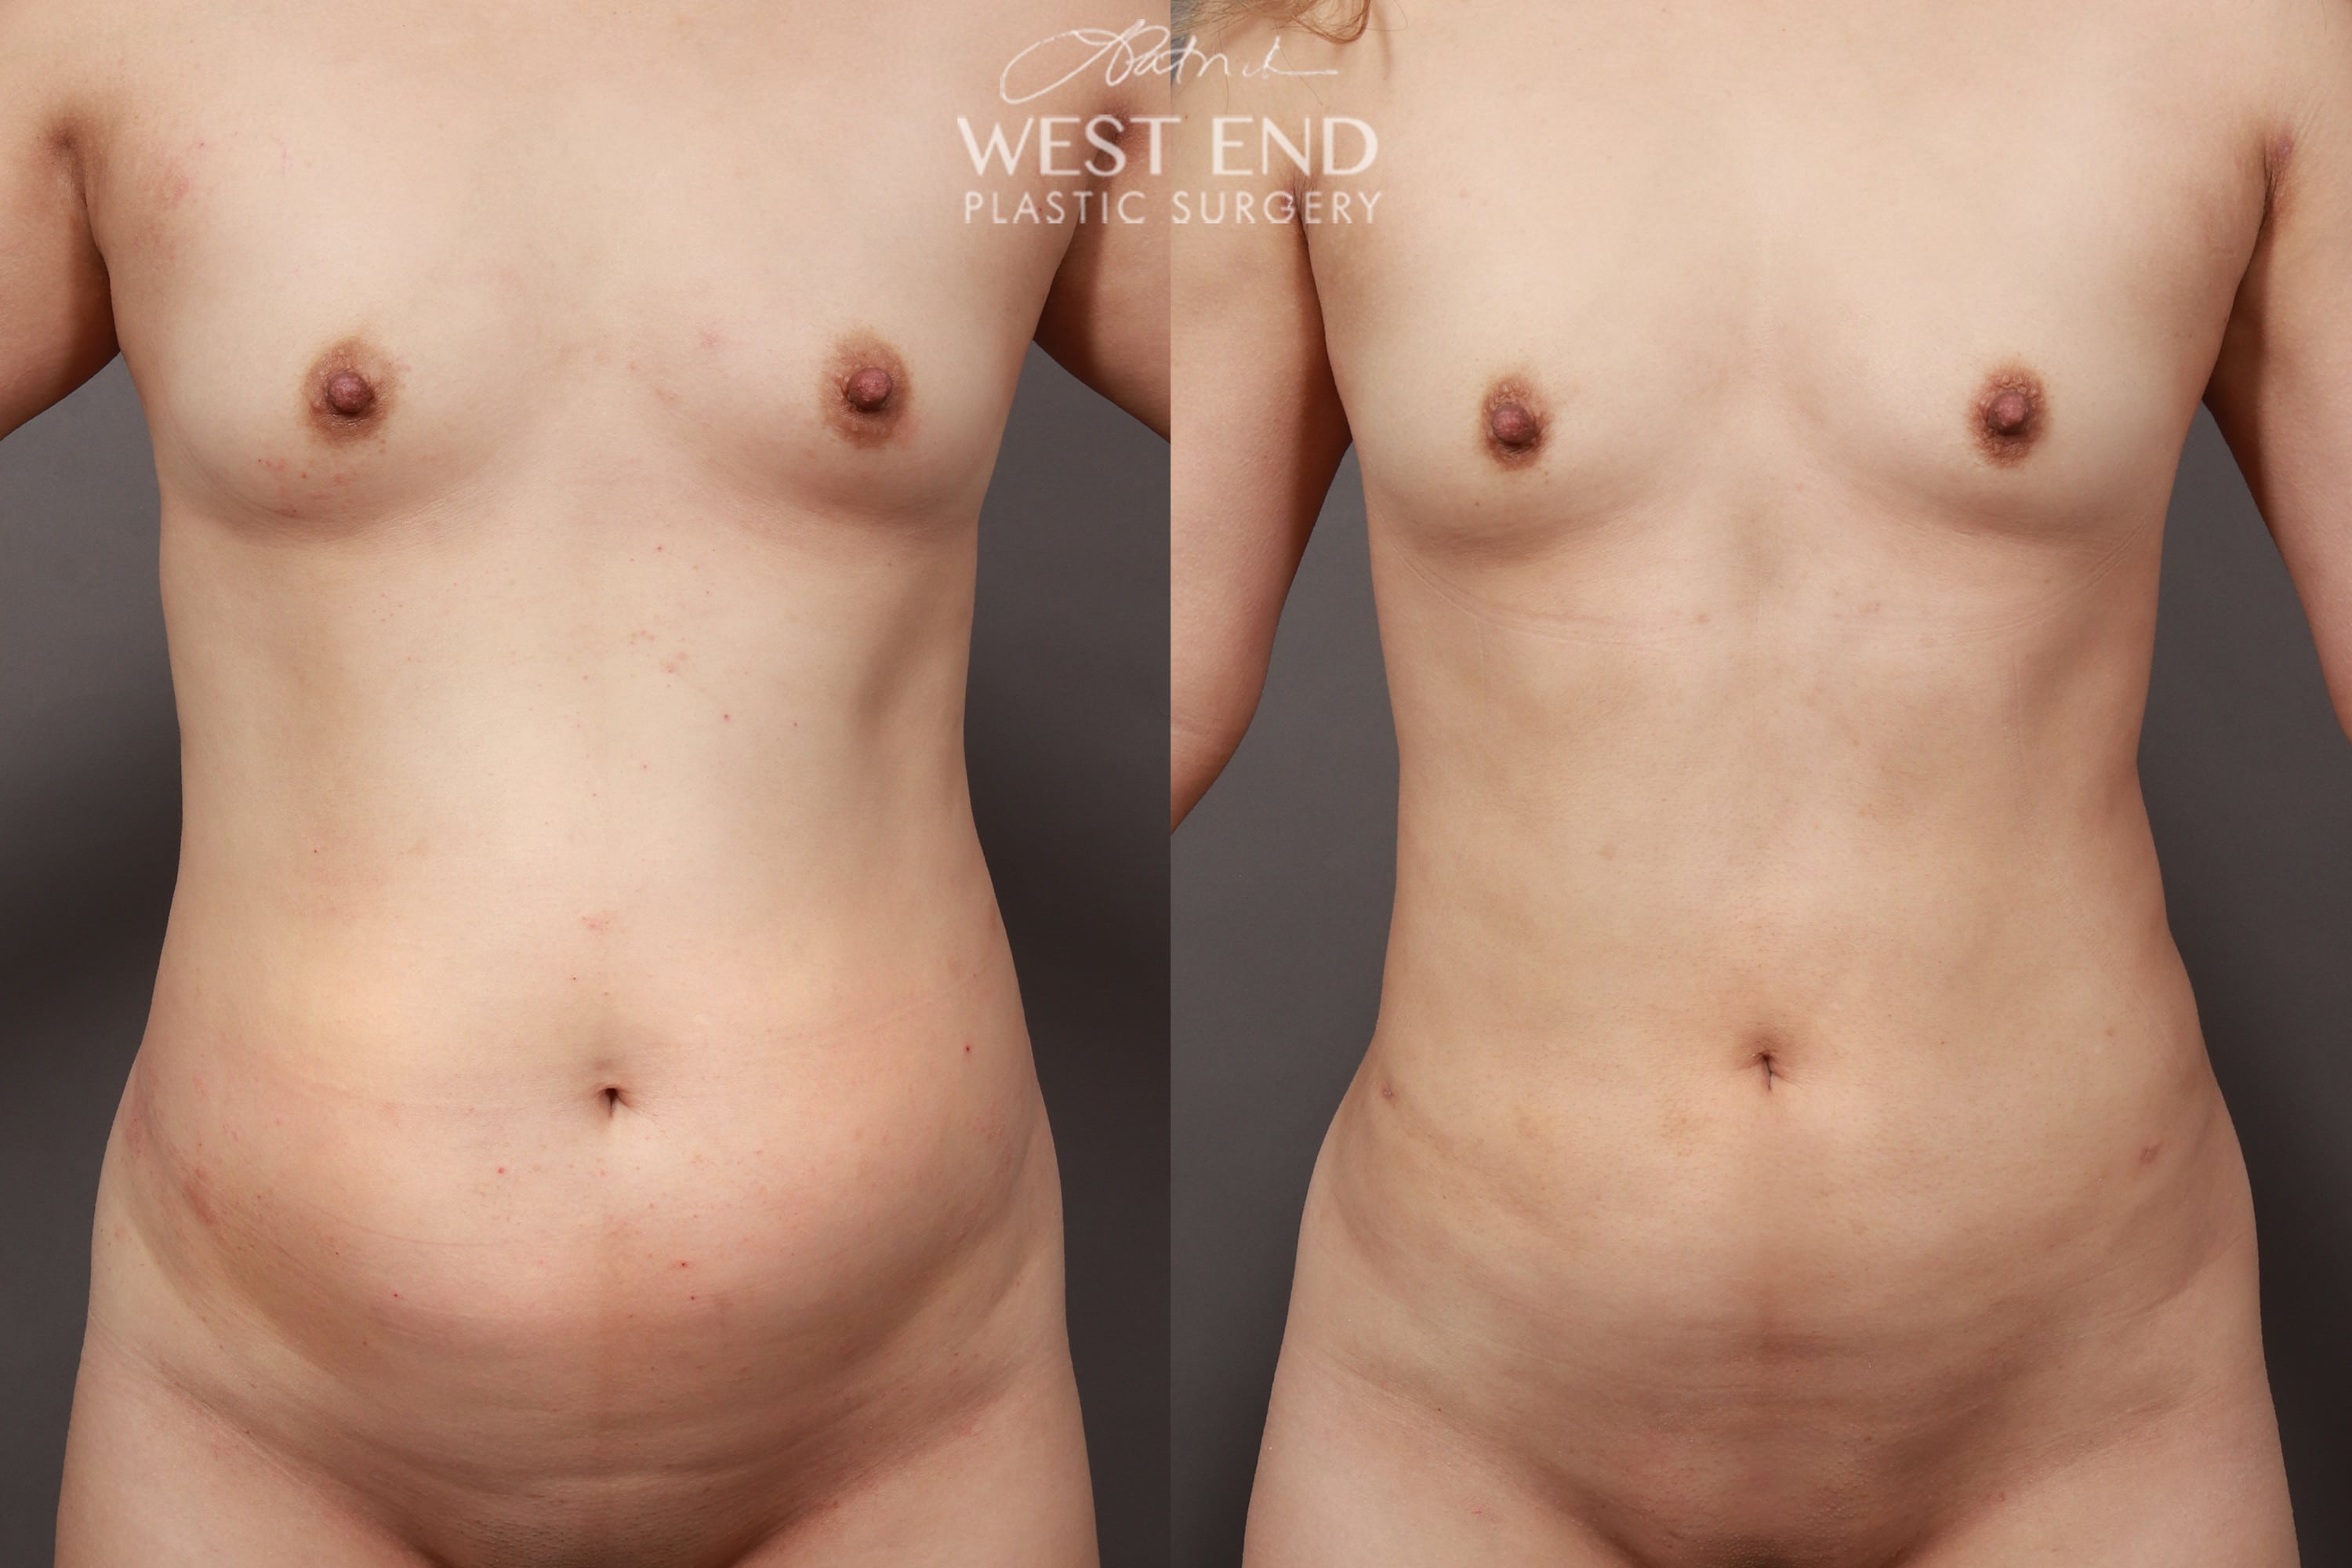 Liposuction and Renuvion Skin Tightening (3 Weeks Post-Op)